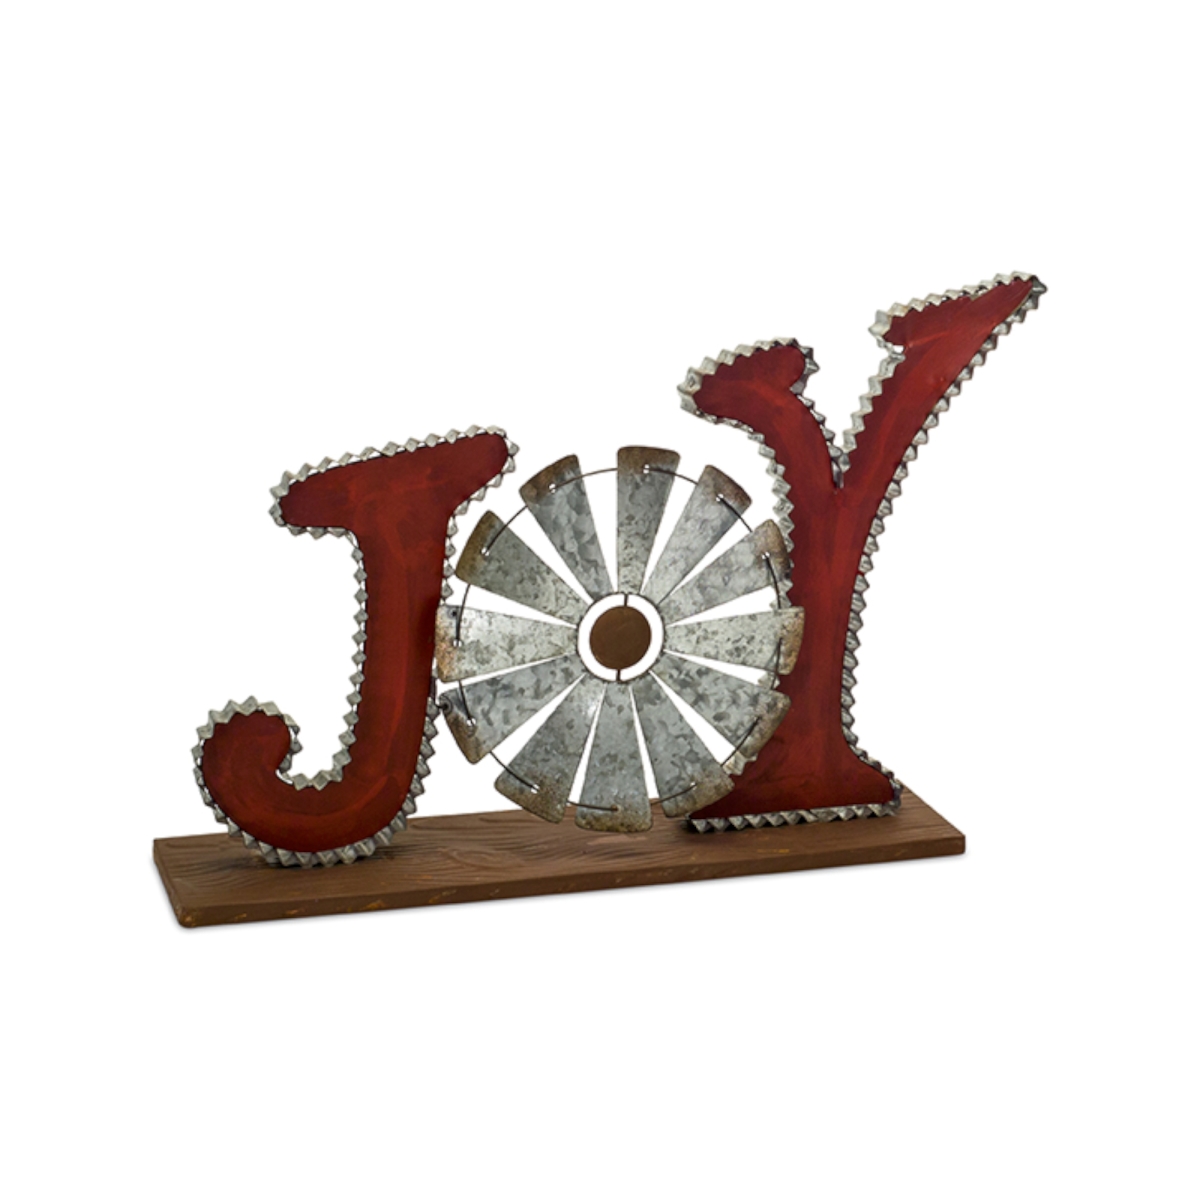 72609ds 14.75 X 4 X 20.75 In. Joy & Windmill Metal - Brown & Red